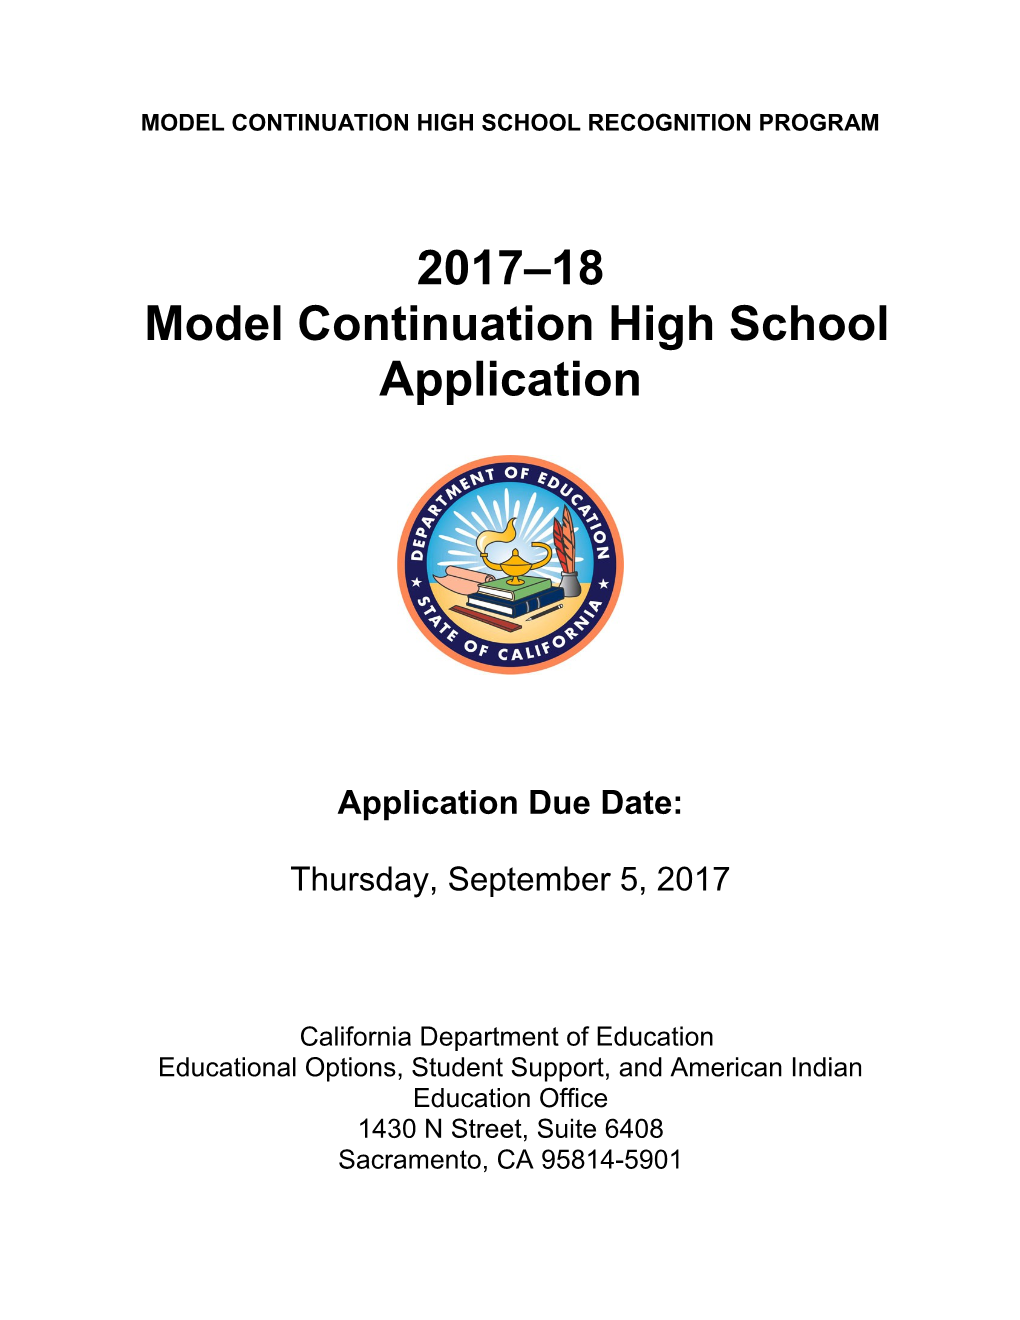 Model Continuation High School Application - Model Continuation High School Recognition